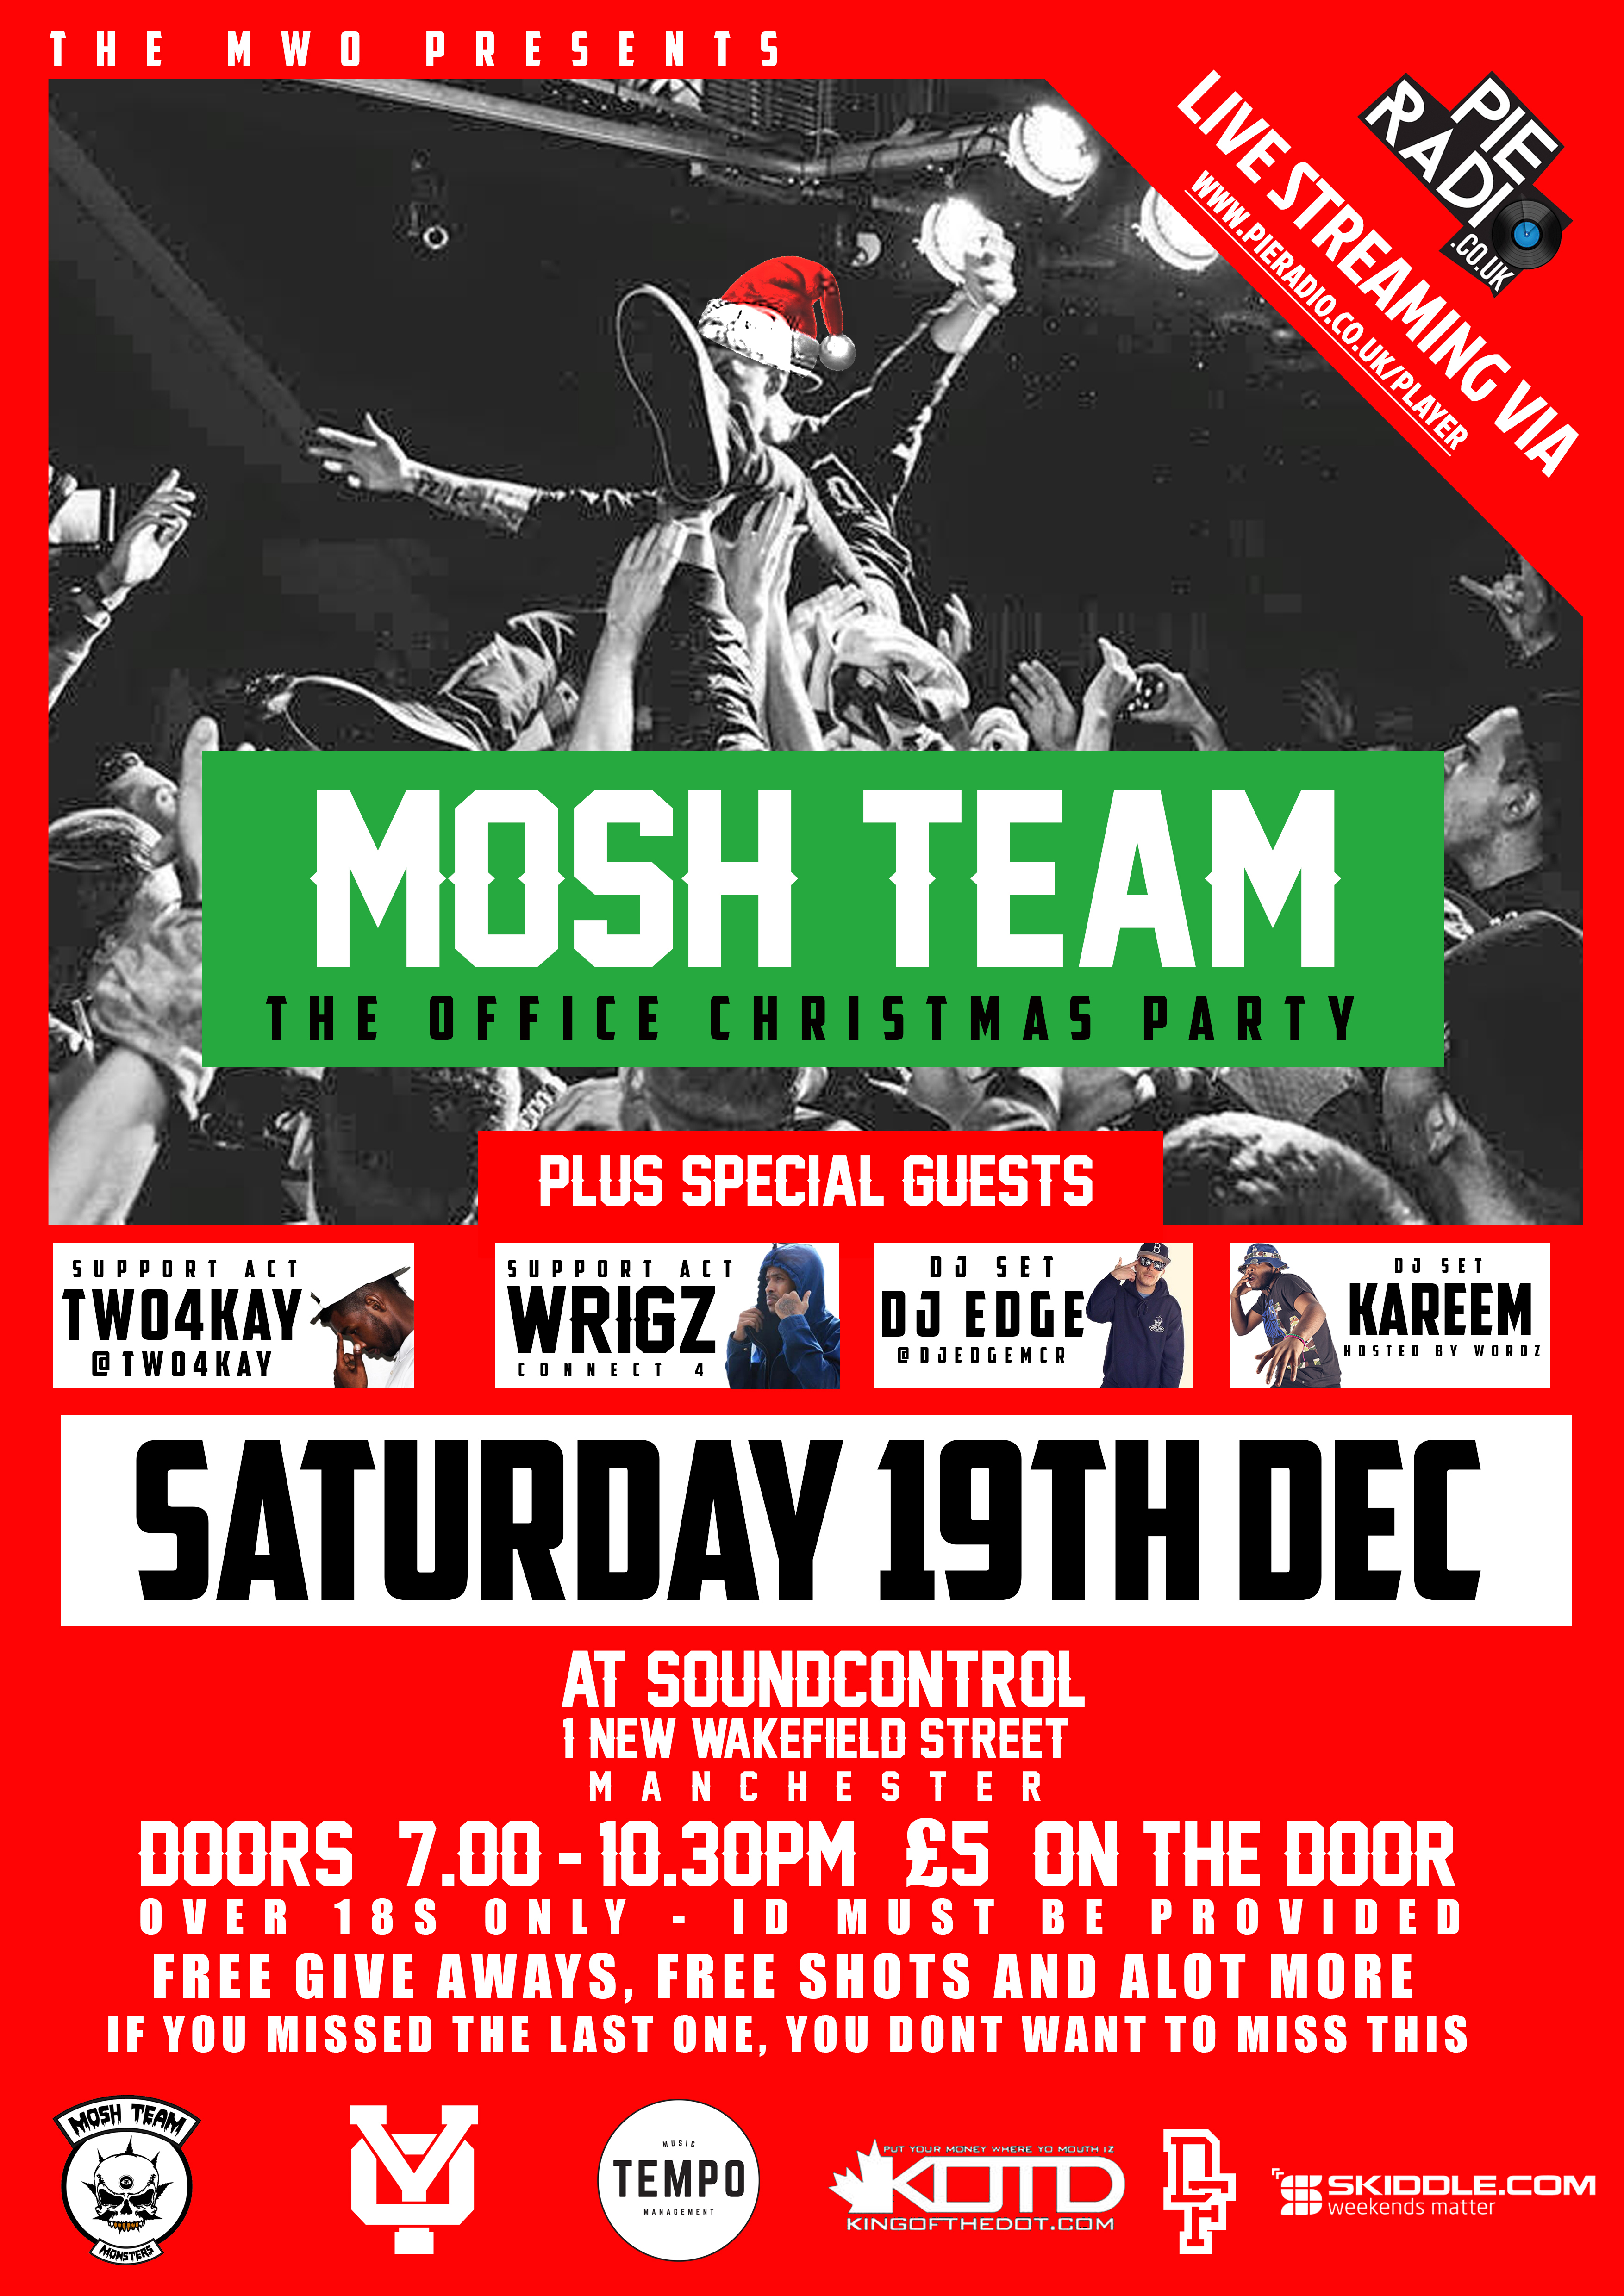 Mosh Team Official Christmas Party + Live Stream by Pie Radio [@MoshTeamOnline]